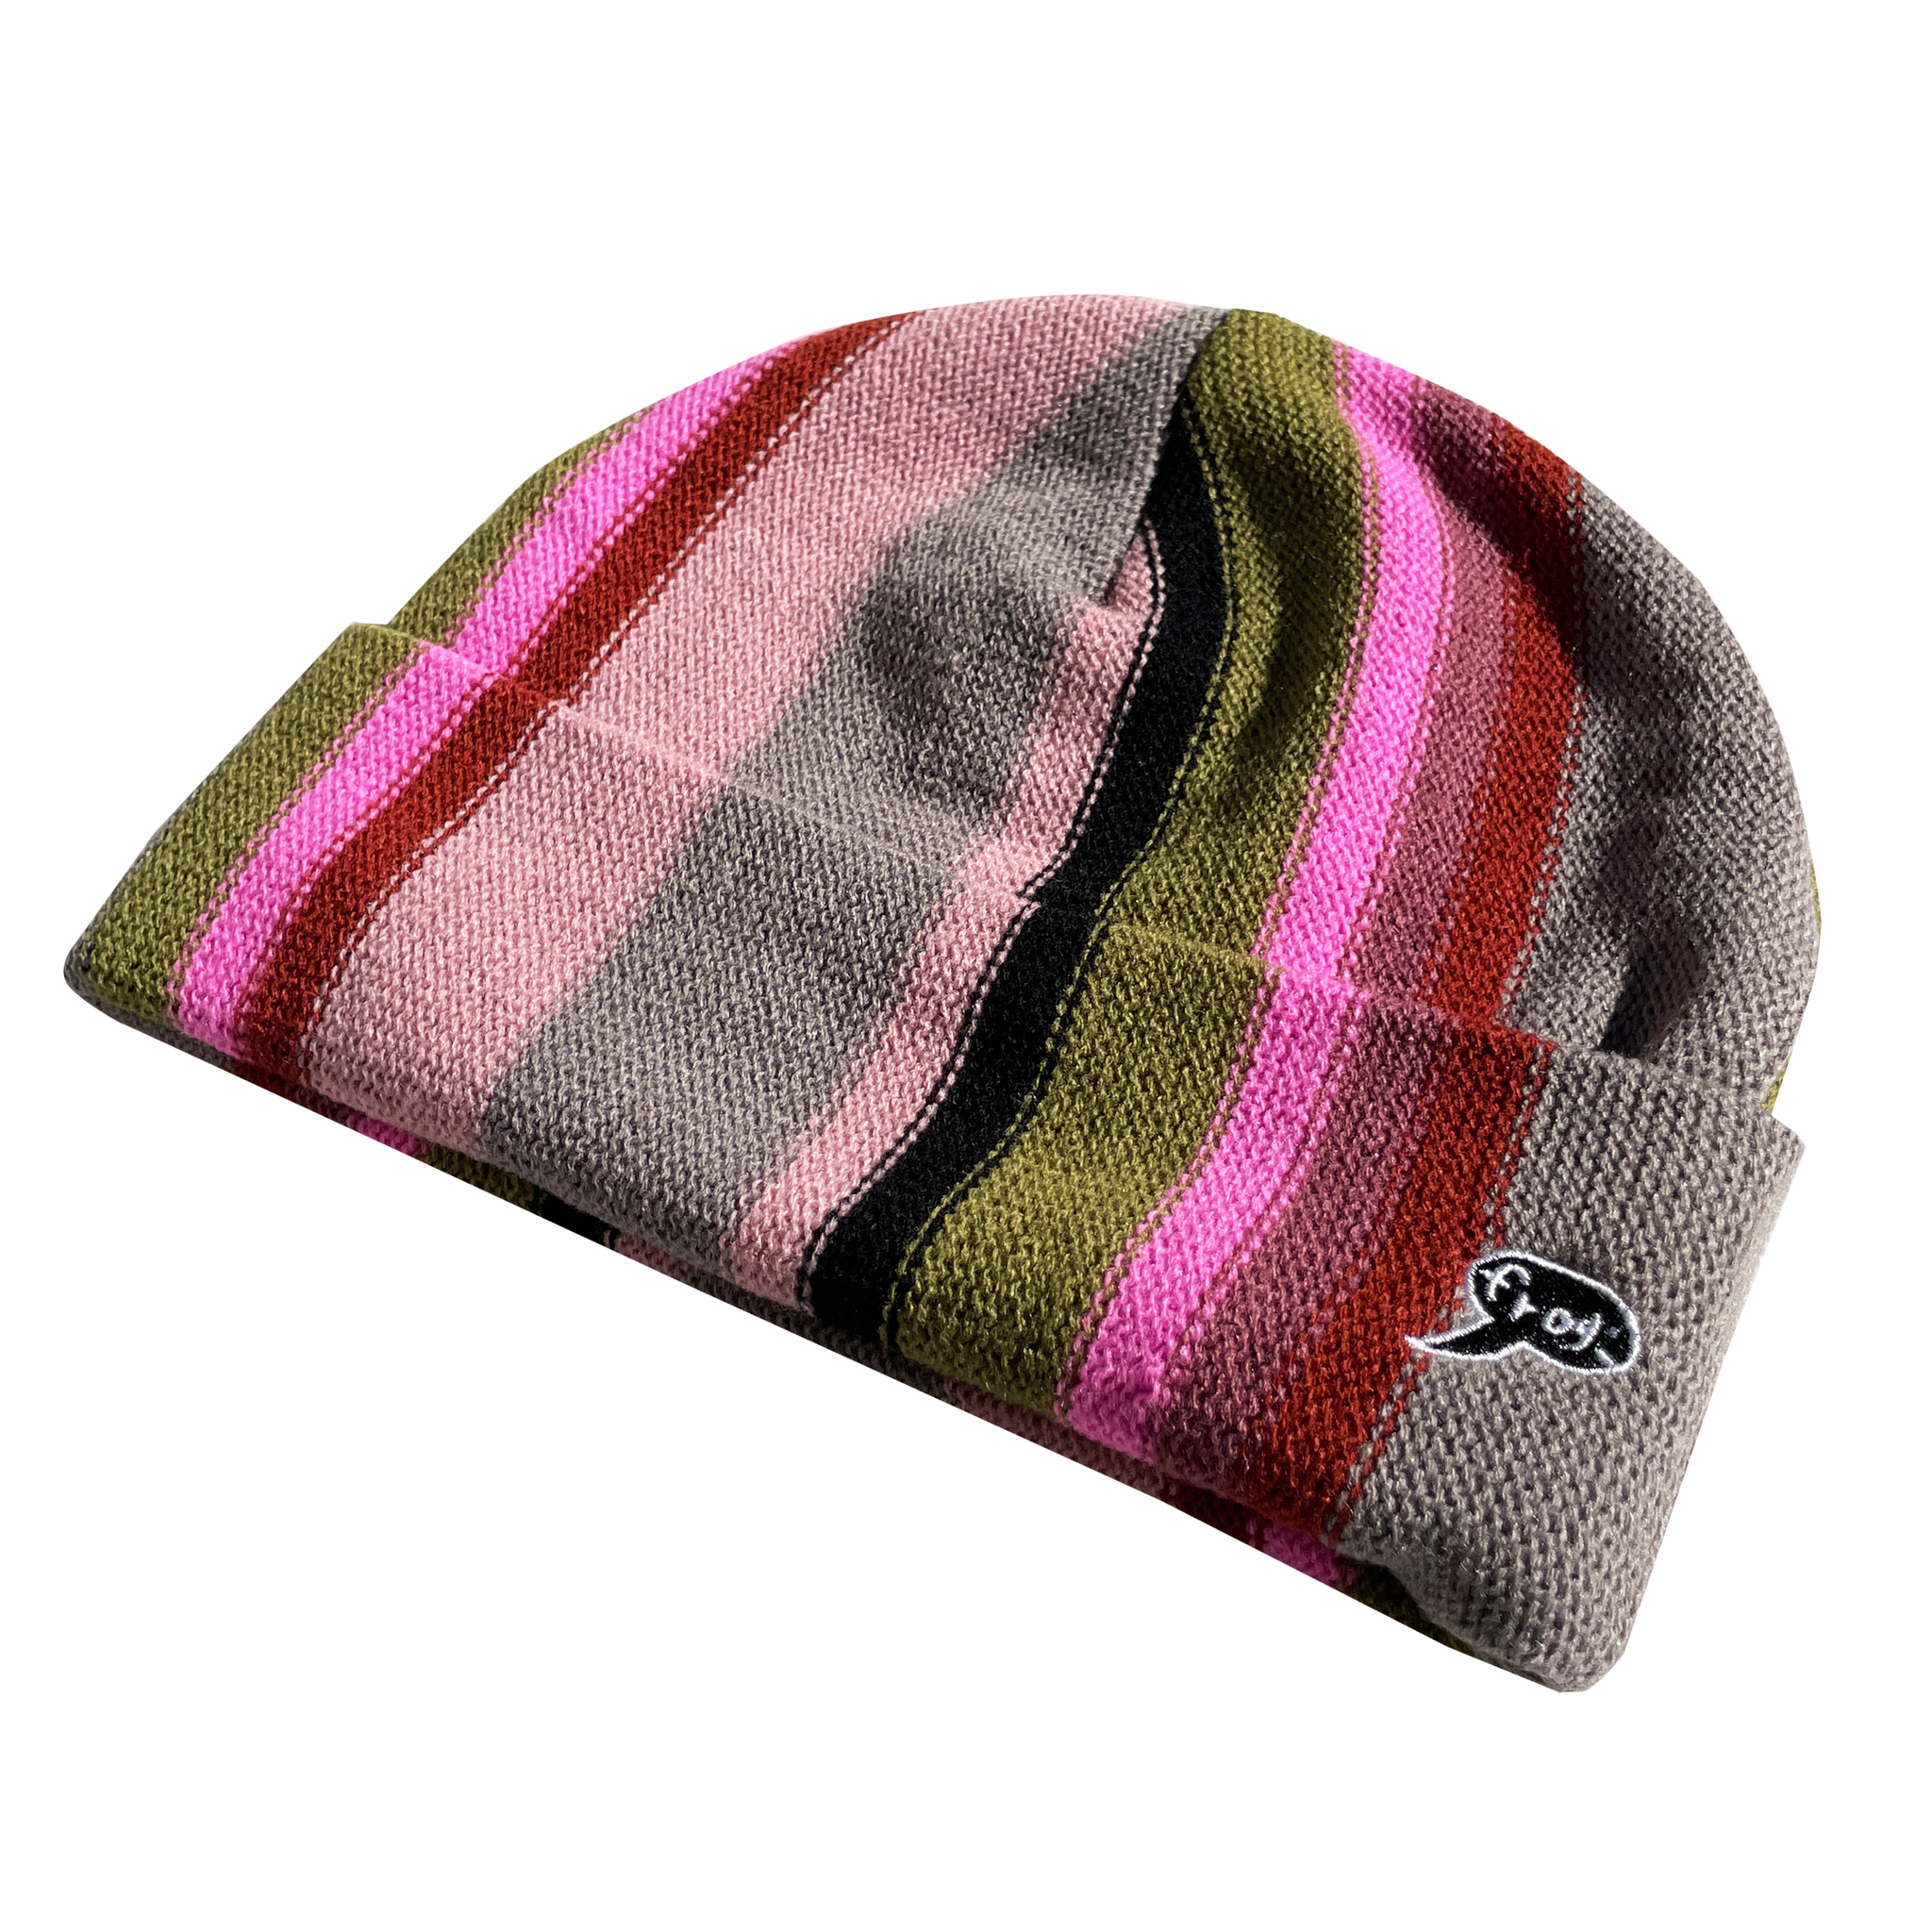 FROG SKATEBOARDS - Vertical Stripe Beanie "Grey/Pink"